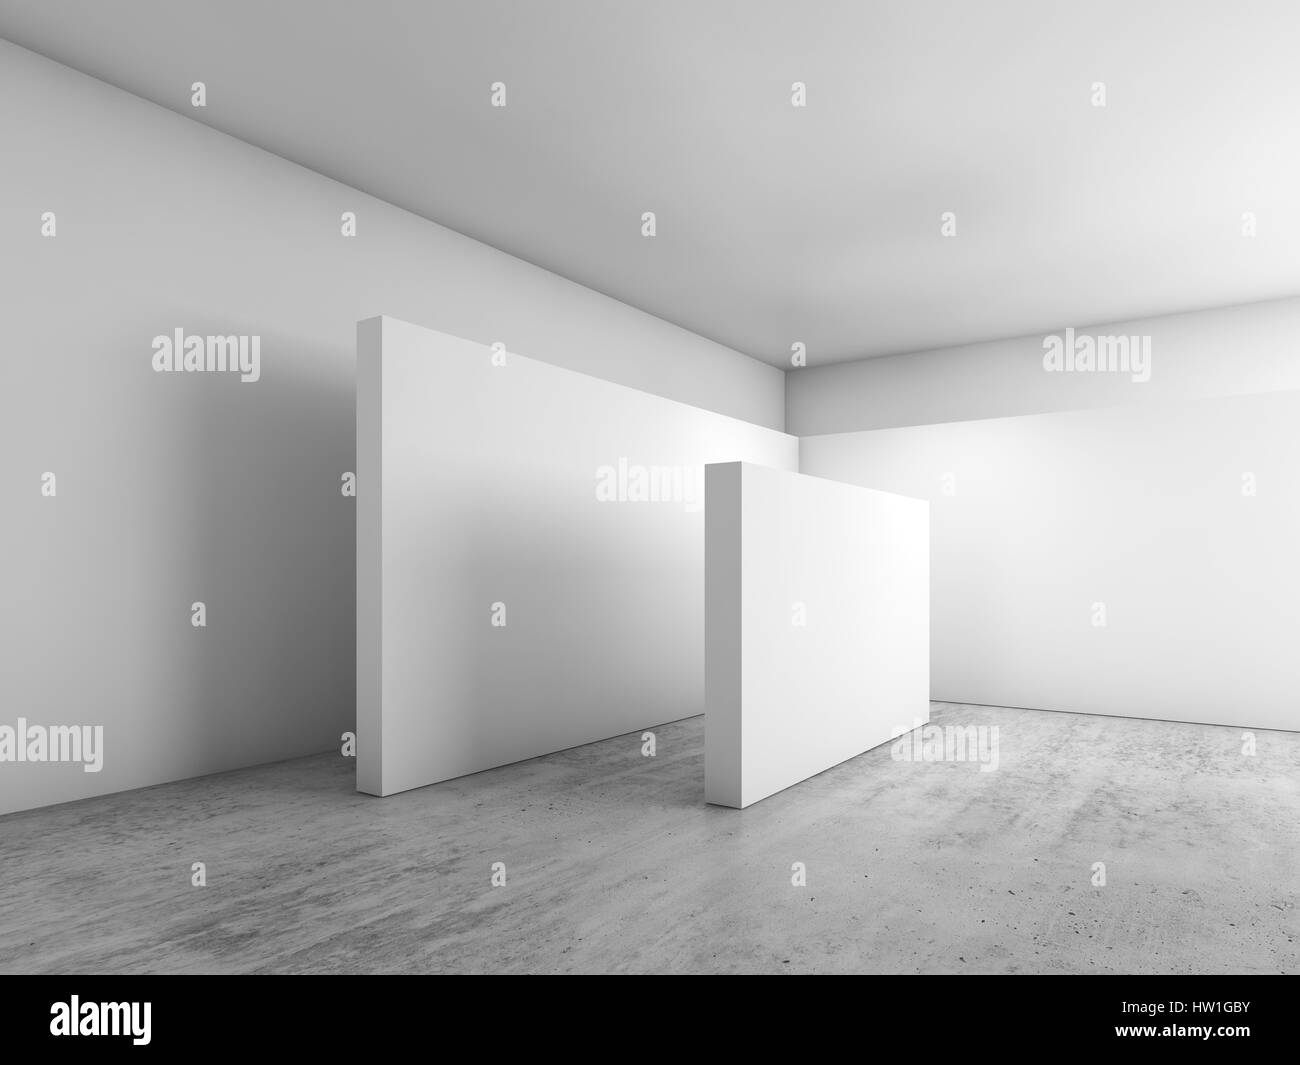 Abstract empty interior, white installation on concrete floor, contemporary architecture design. 3d illustration Stock Photo